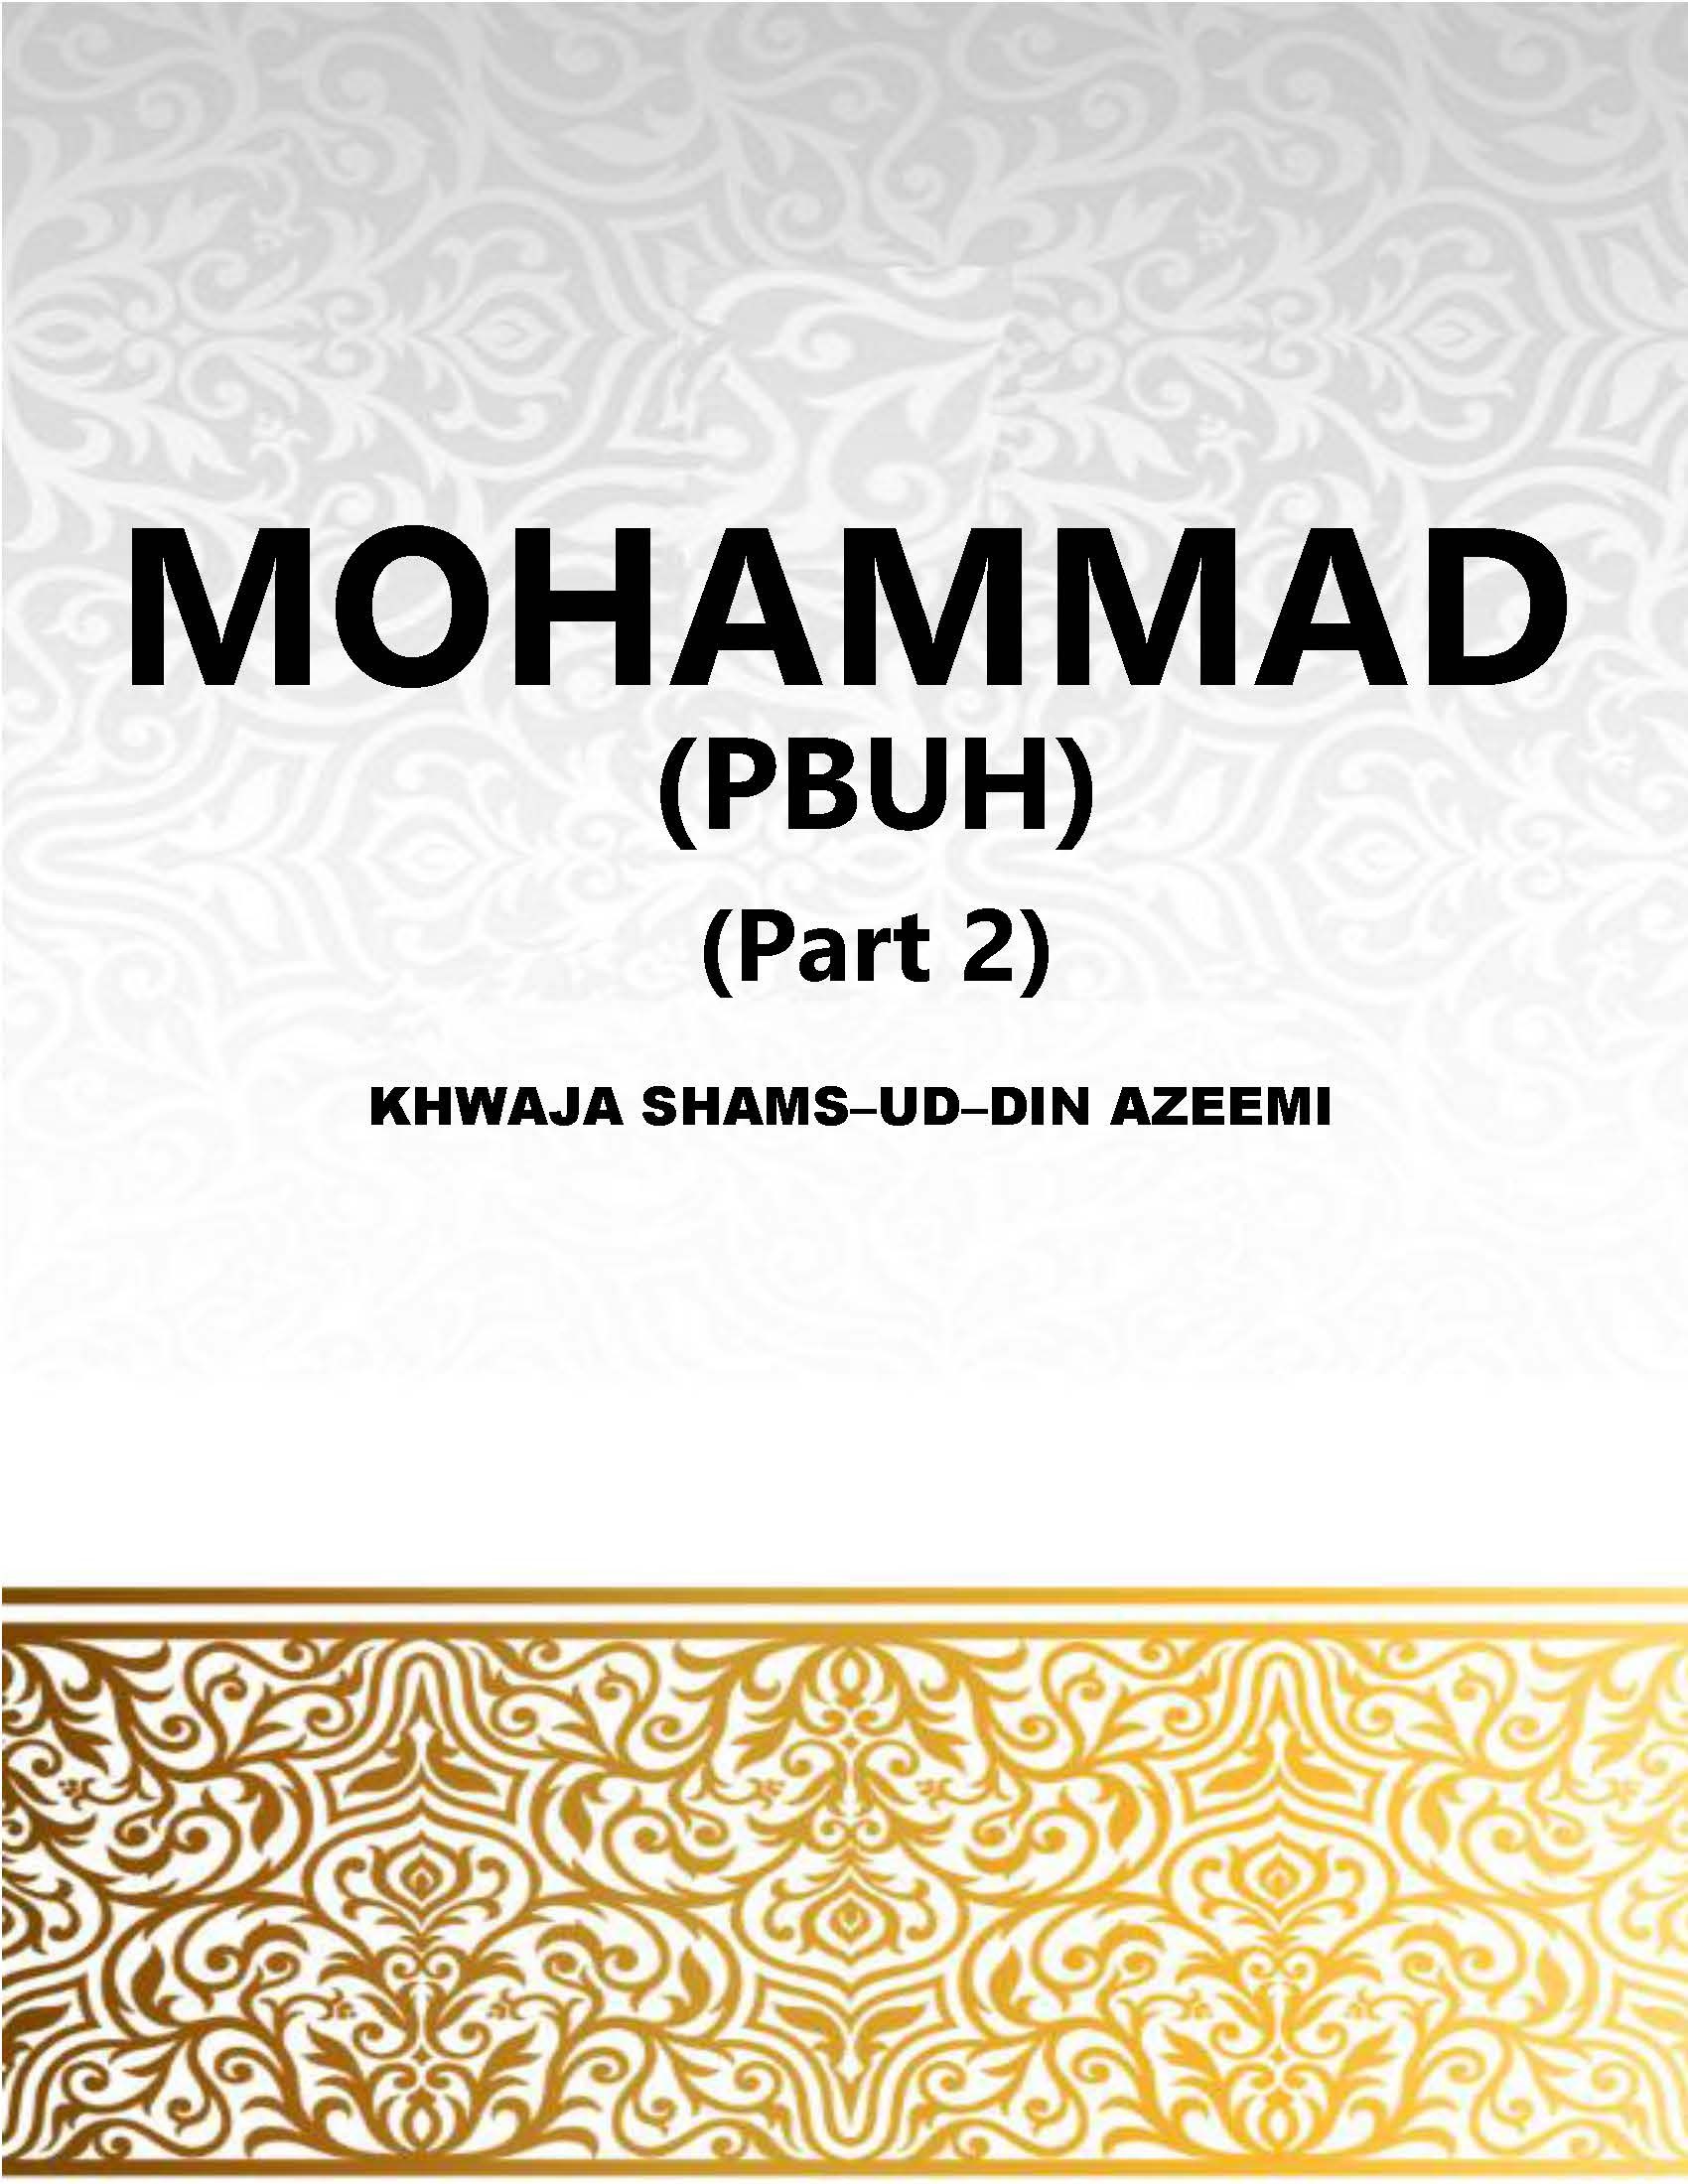 MOHAMMAD (PBUH) The Prophet Of God  Part 2